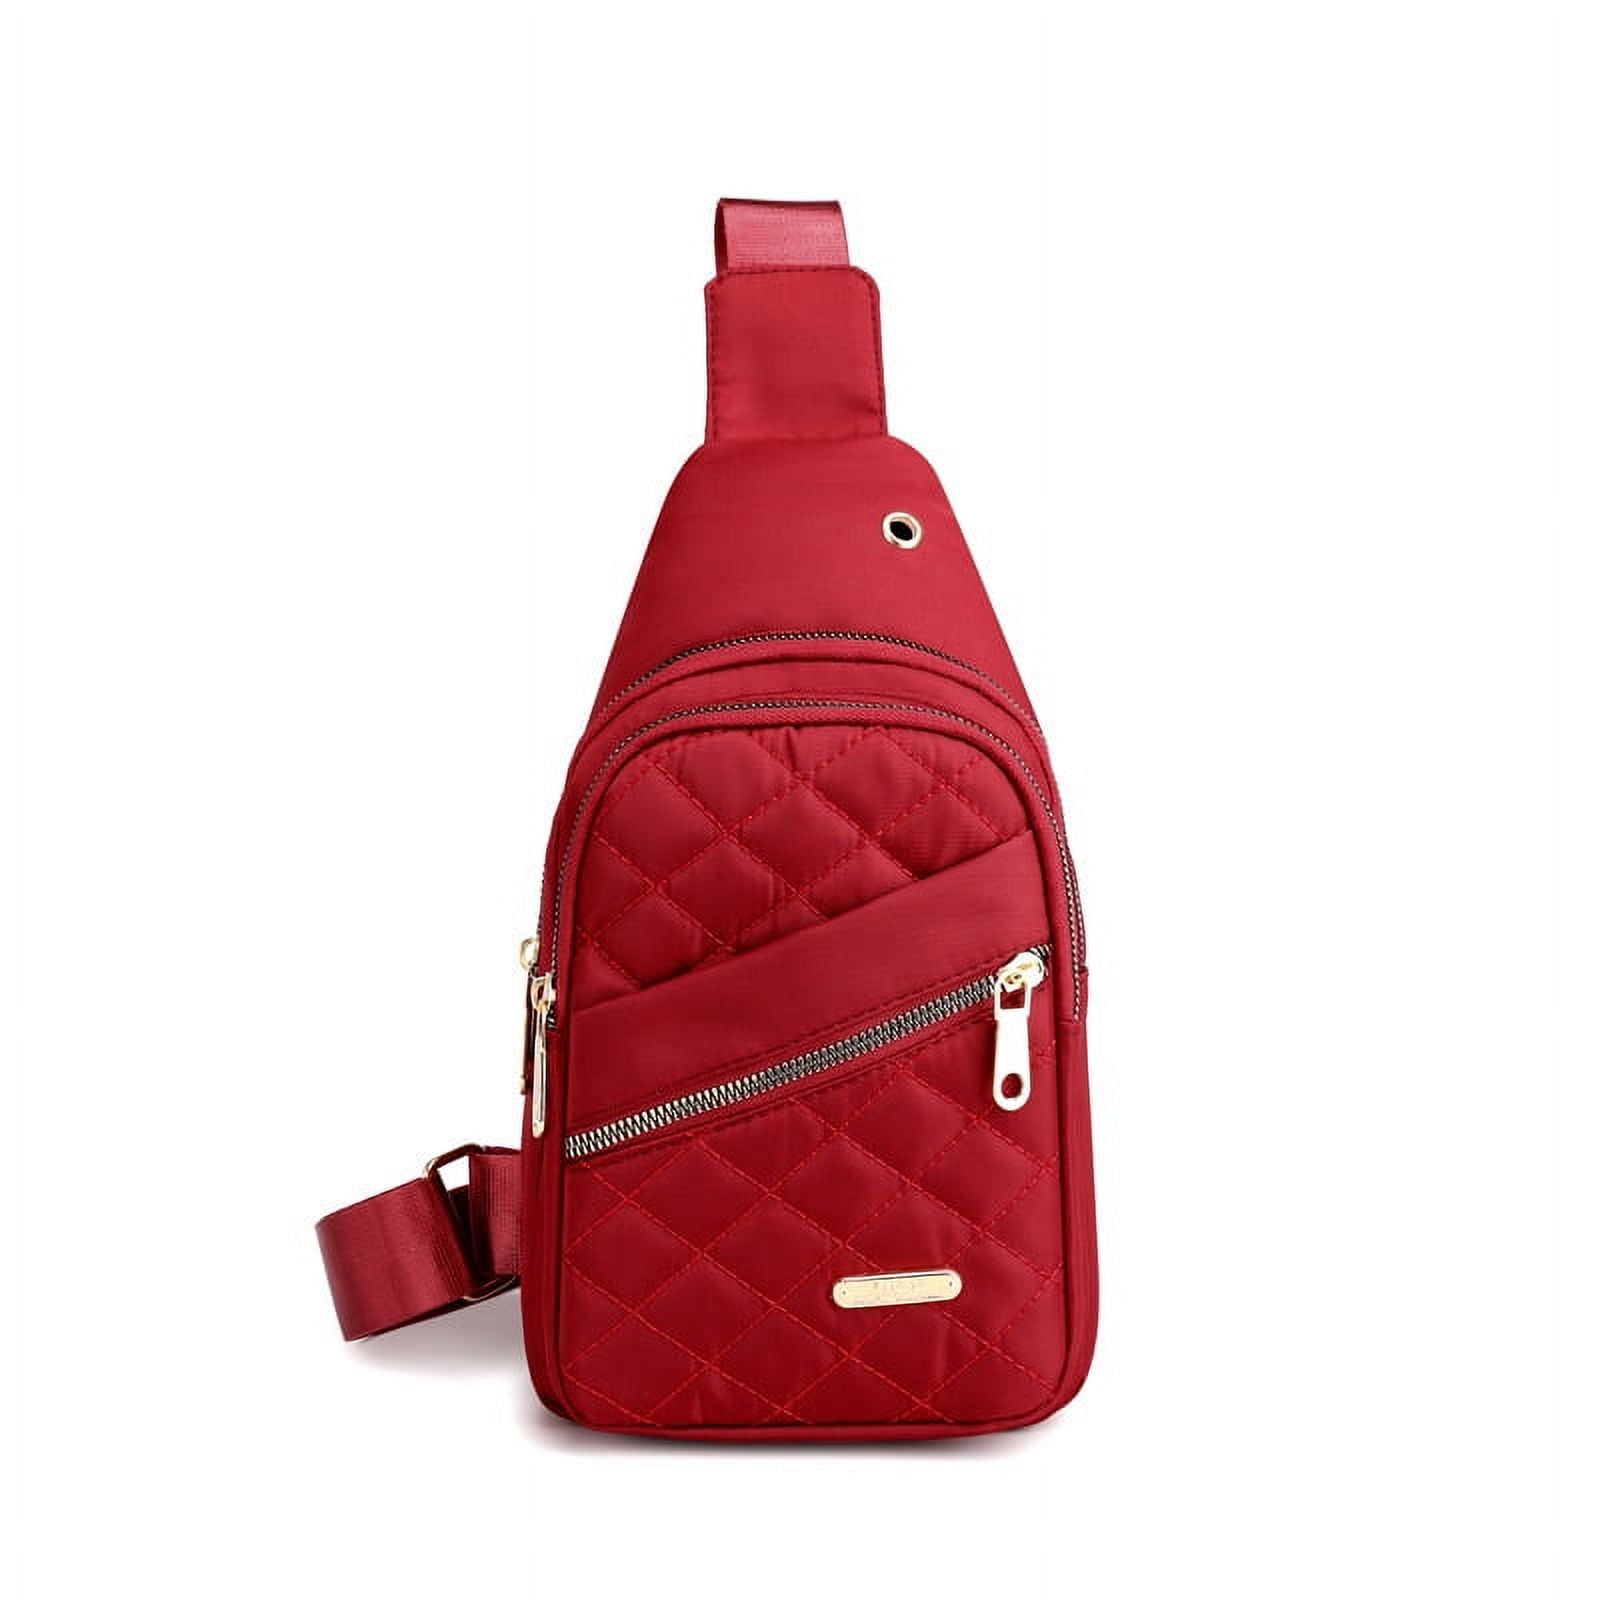 Best travel sling bag for ladies,small sling bags for women, fancy sling  bags, sling bags